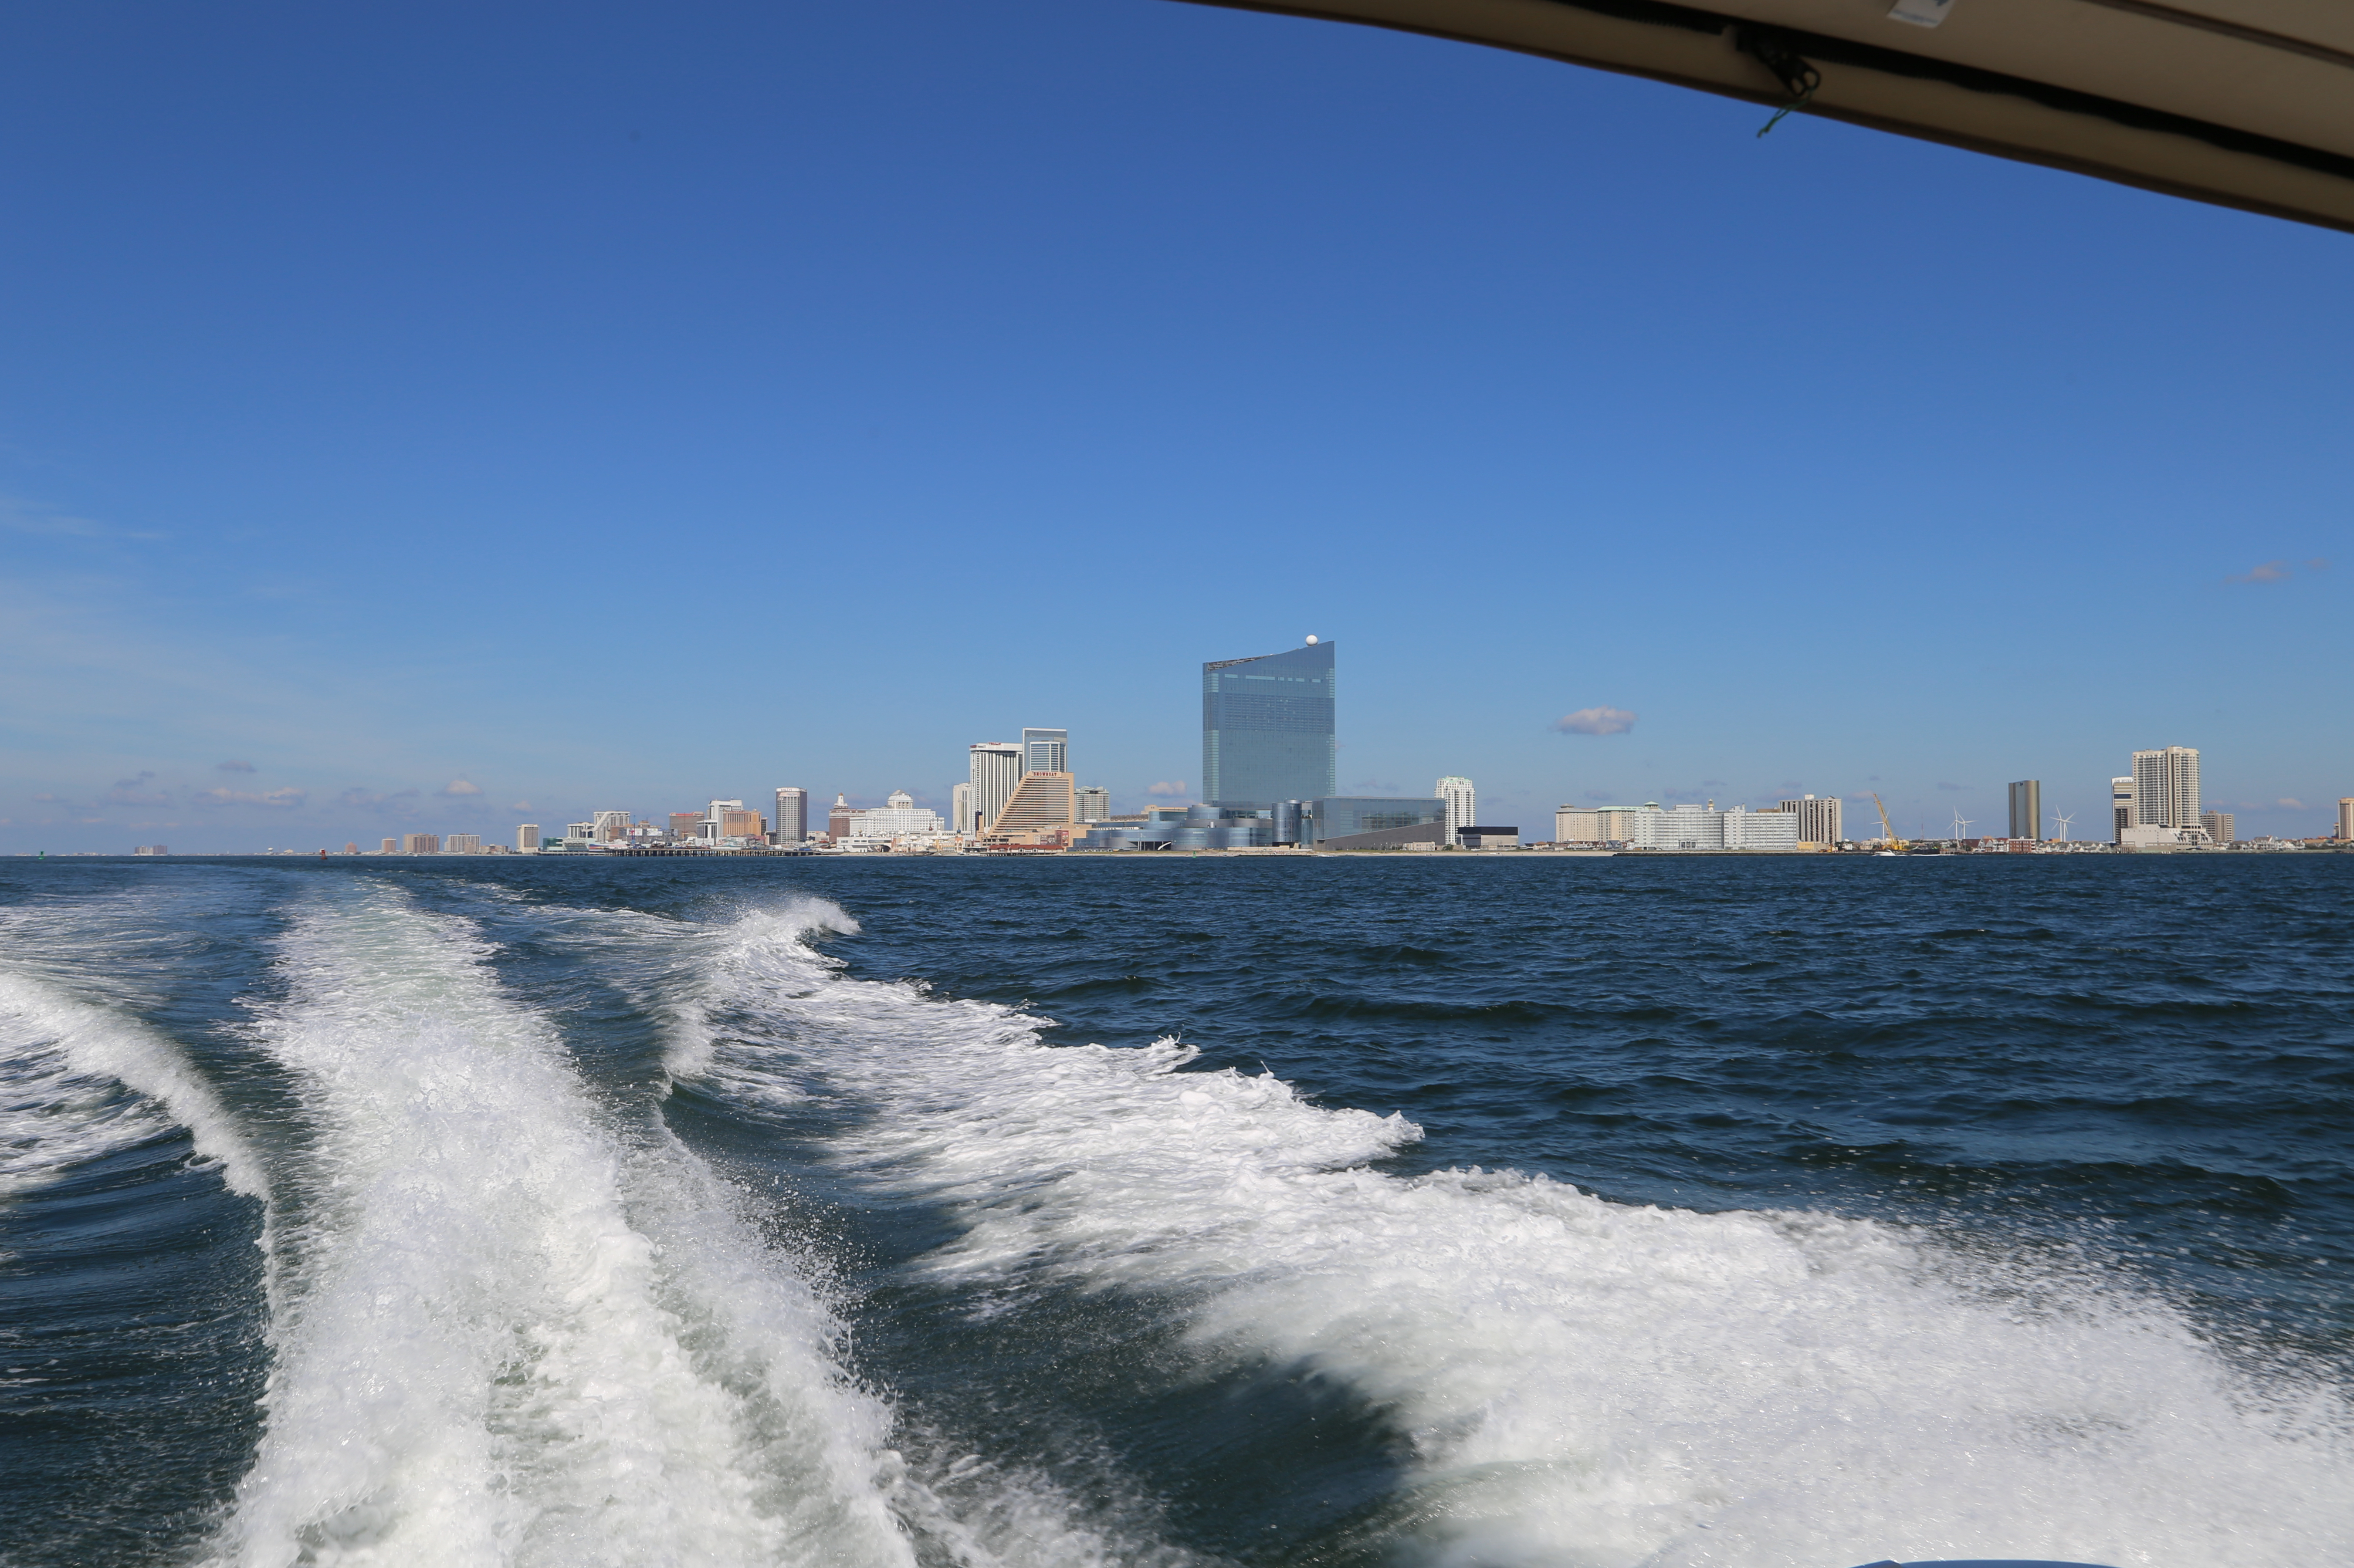 Leaving Atlantic City via the Atlantic Ocean from the Abescon Inlet.